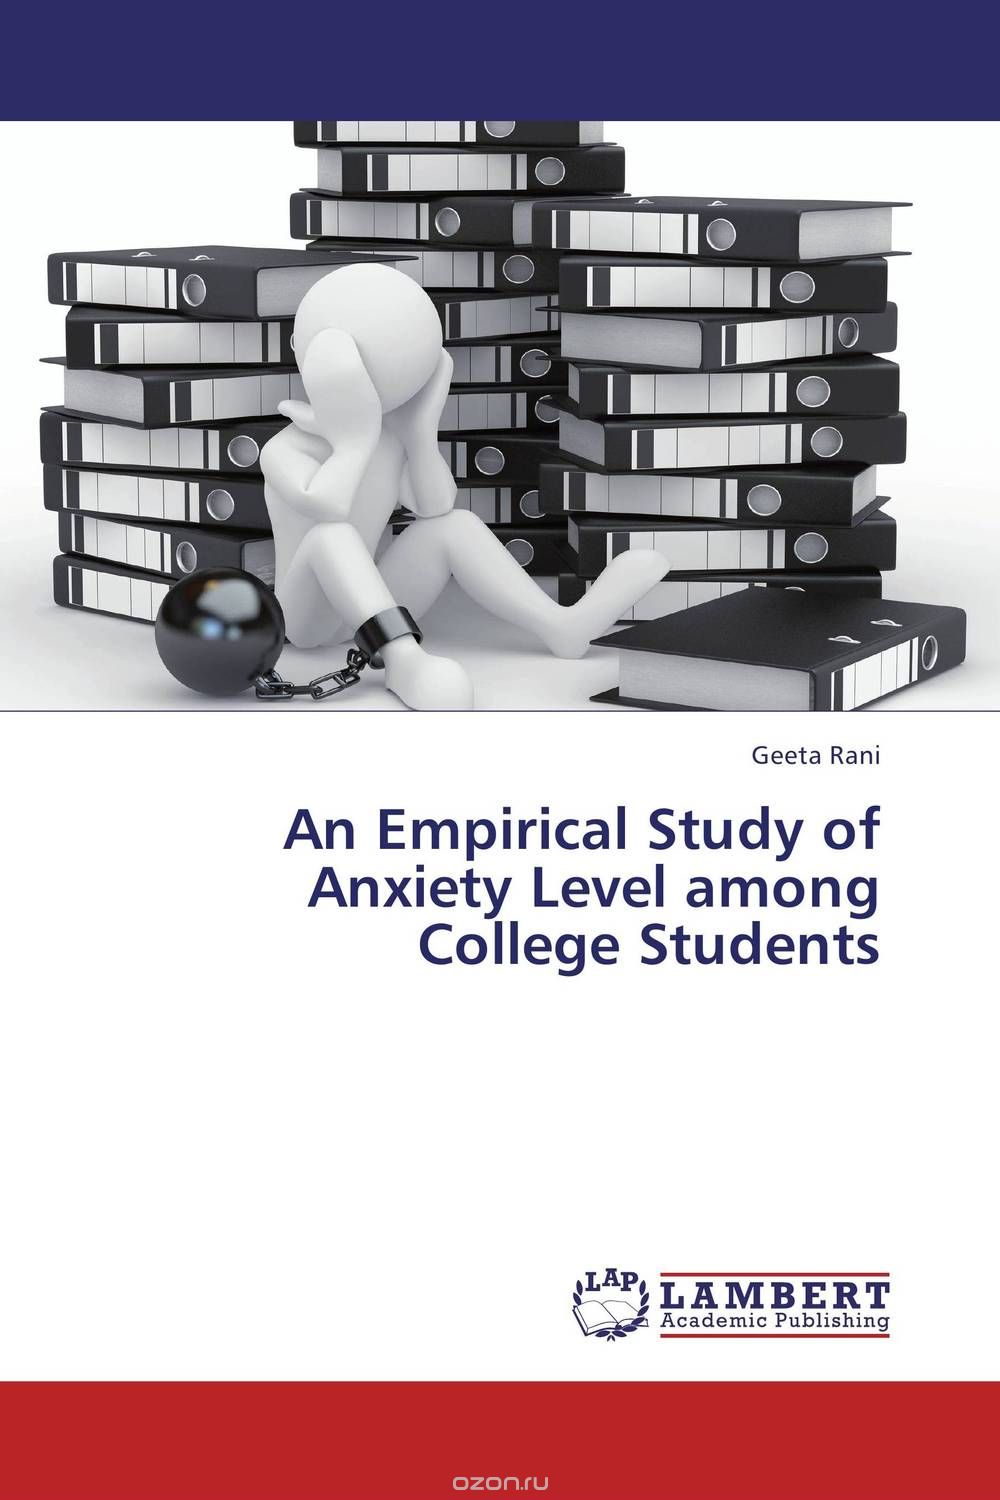 Скачать книгу "An Empirical Study of Anxiety Level among College Students"